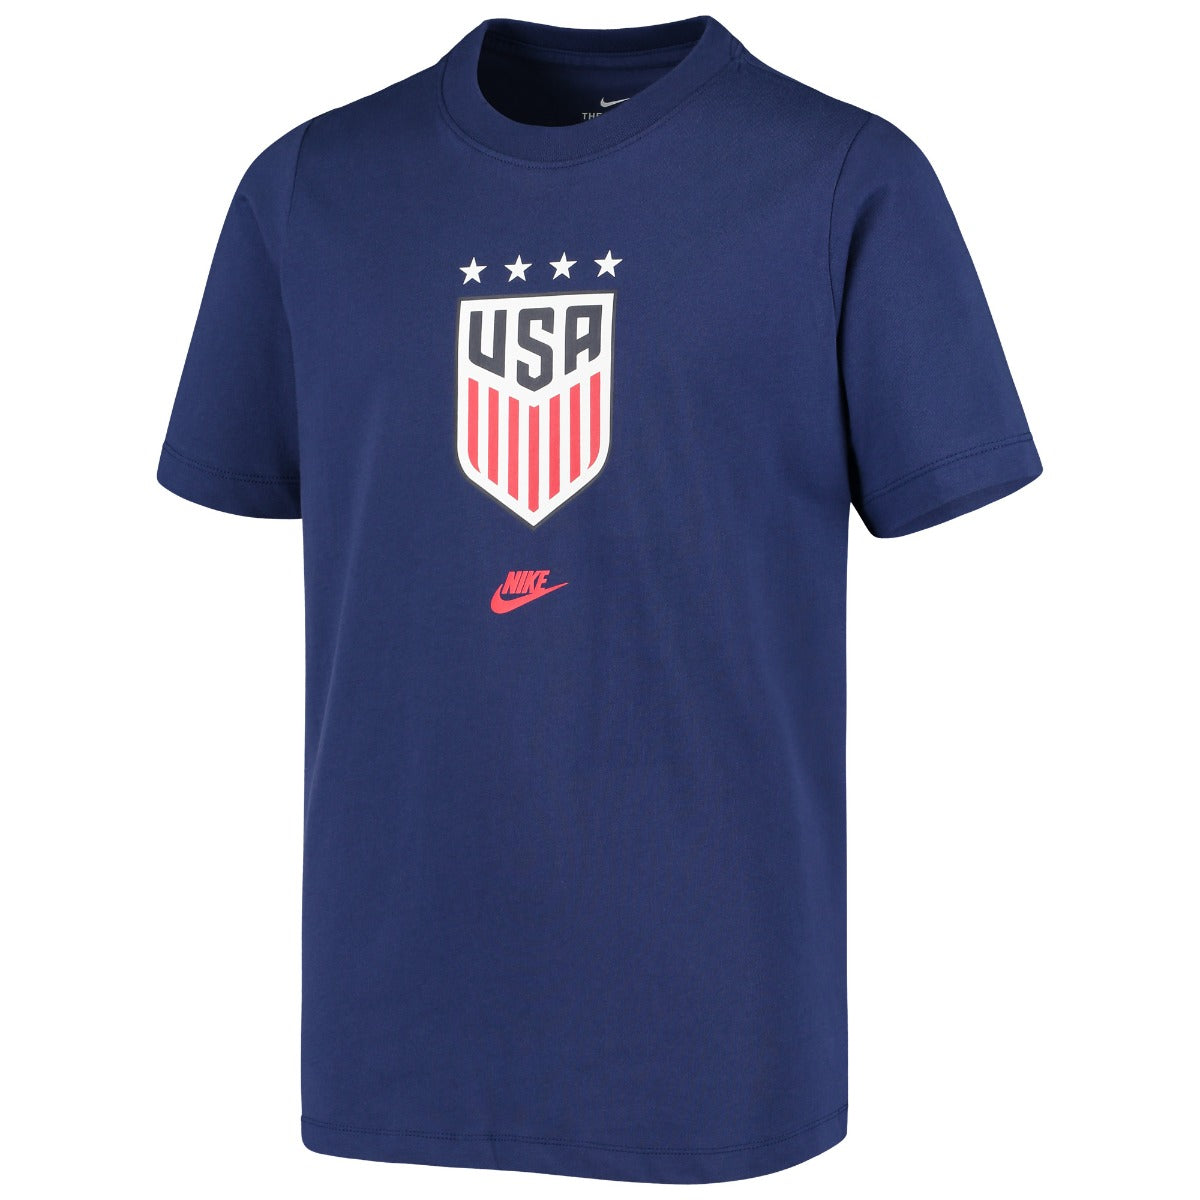 Nike 2020-21 USA Youth 4 Star Crest Tee - Navy